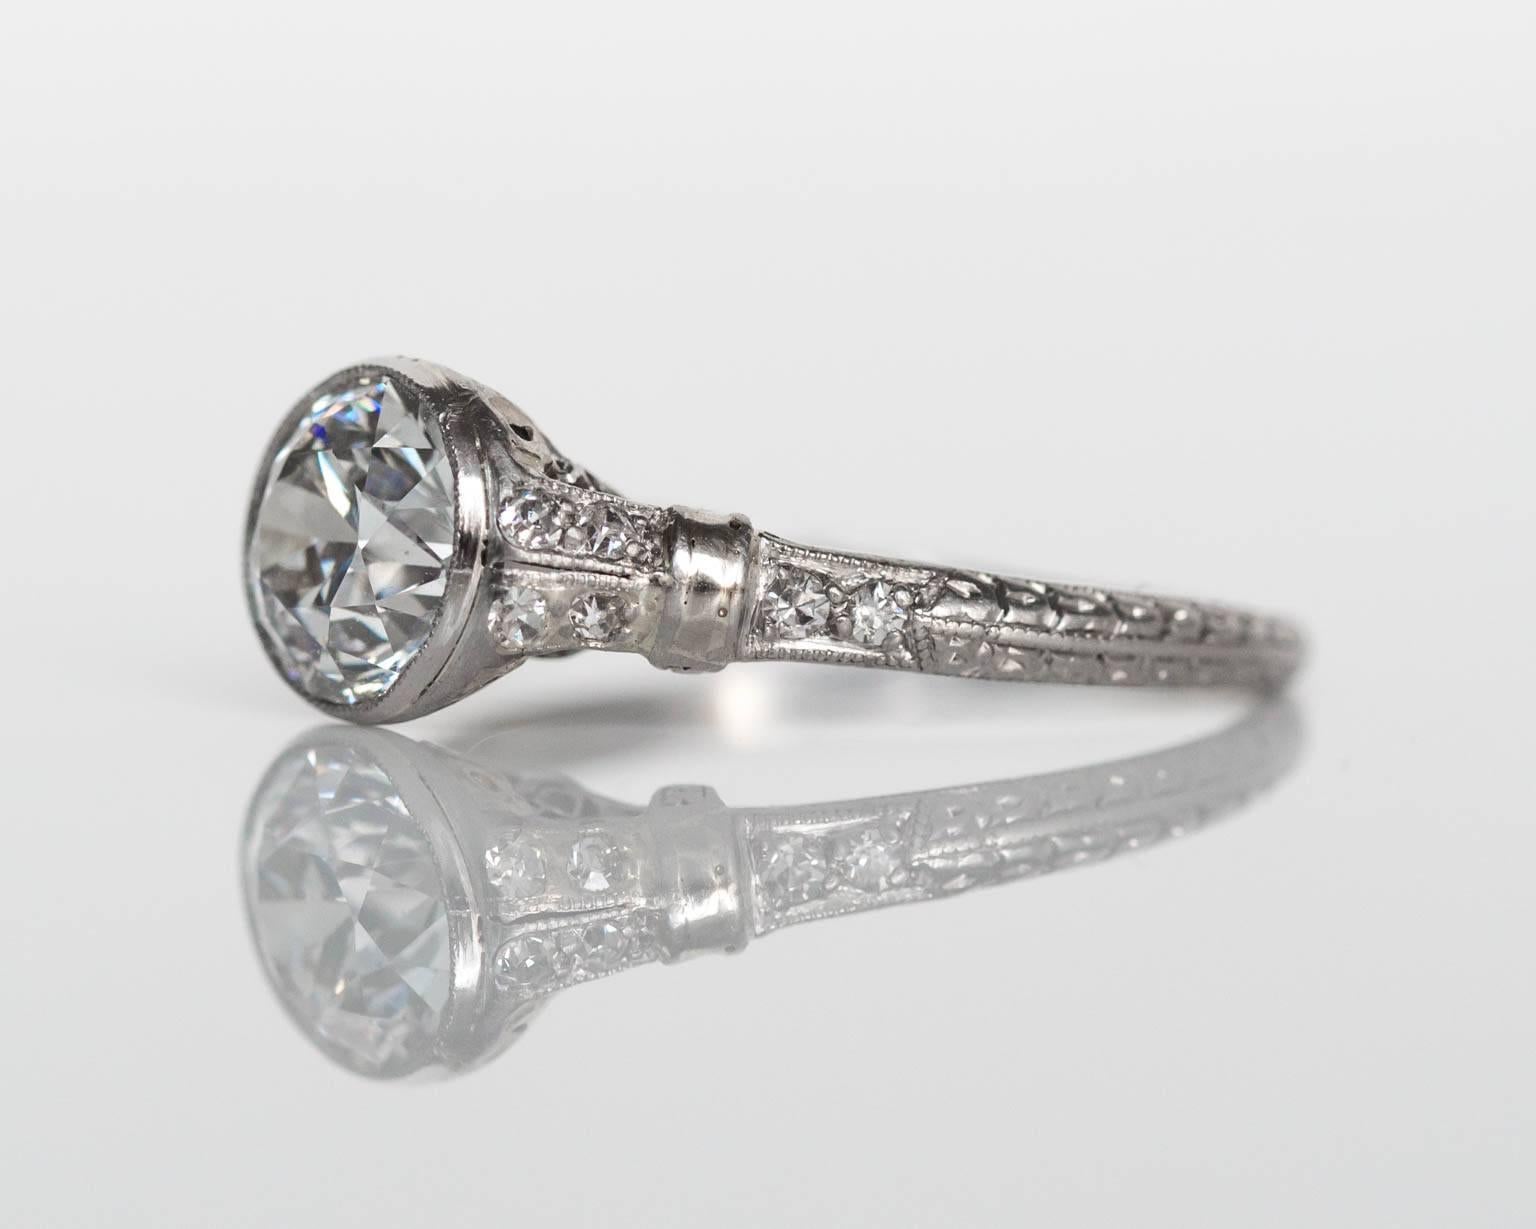 1920s Art Deco Platinum 1.01 carat Diamond Engagement Ring with Side Stones 1